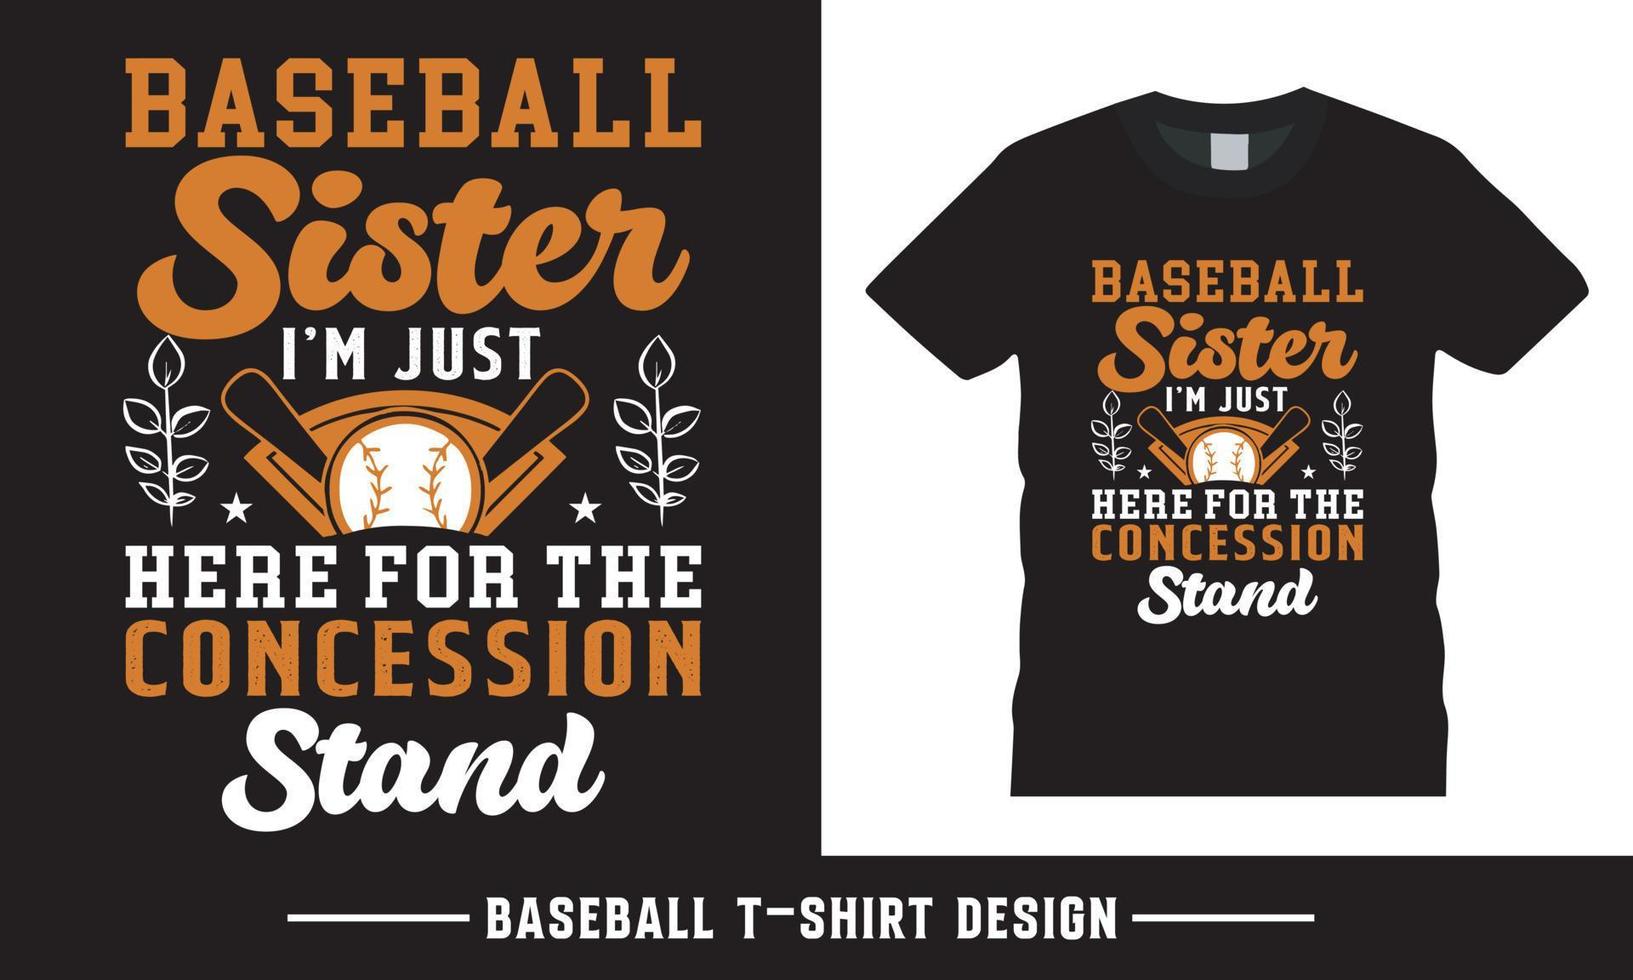 baseboll skjorta design, baseboll typografi vektor tshirt design mall